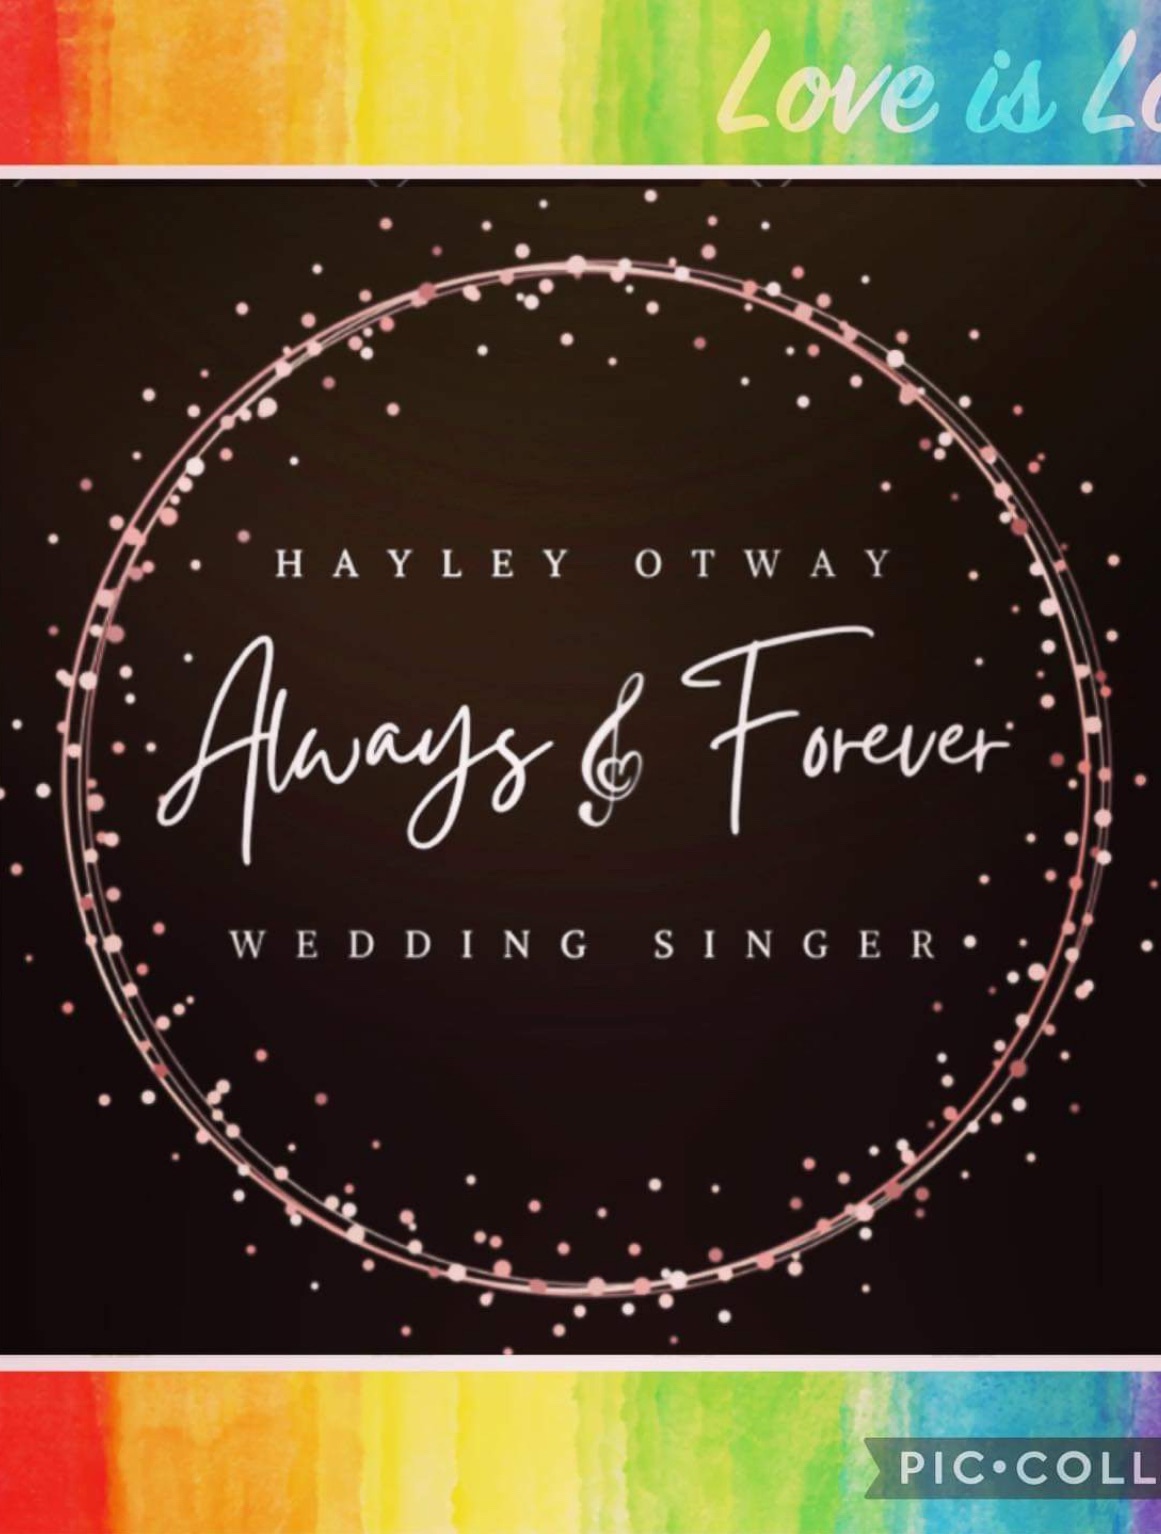 Hayley Otway - Always & Forever Wedding Singer-Image-34